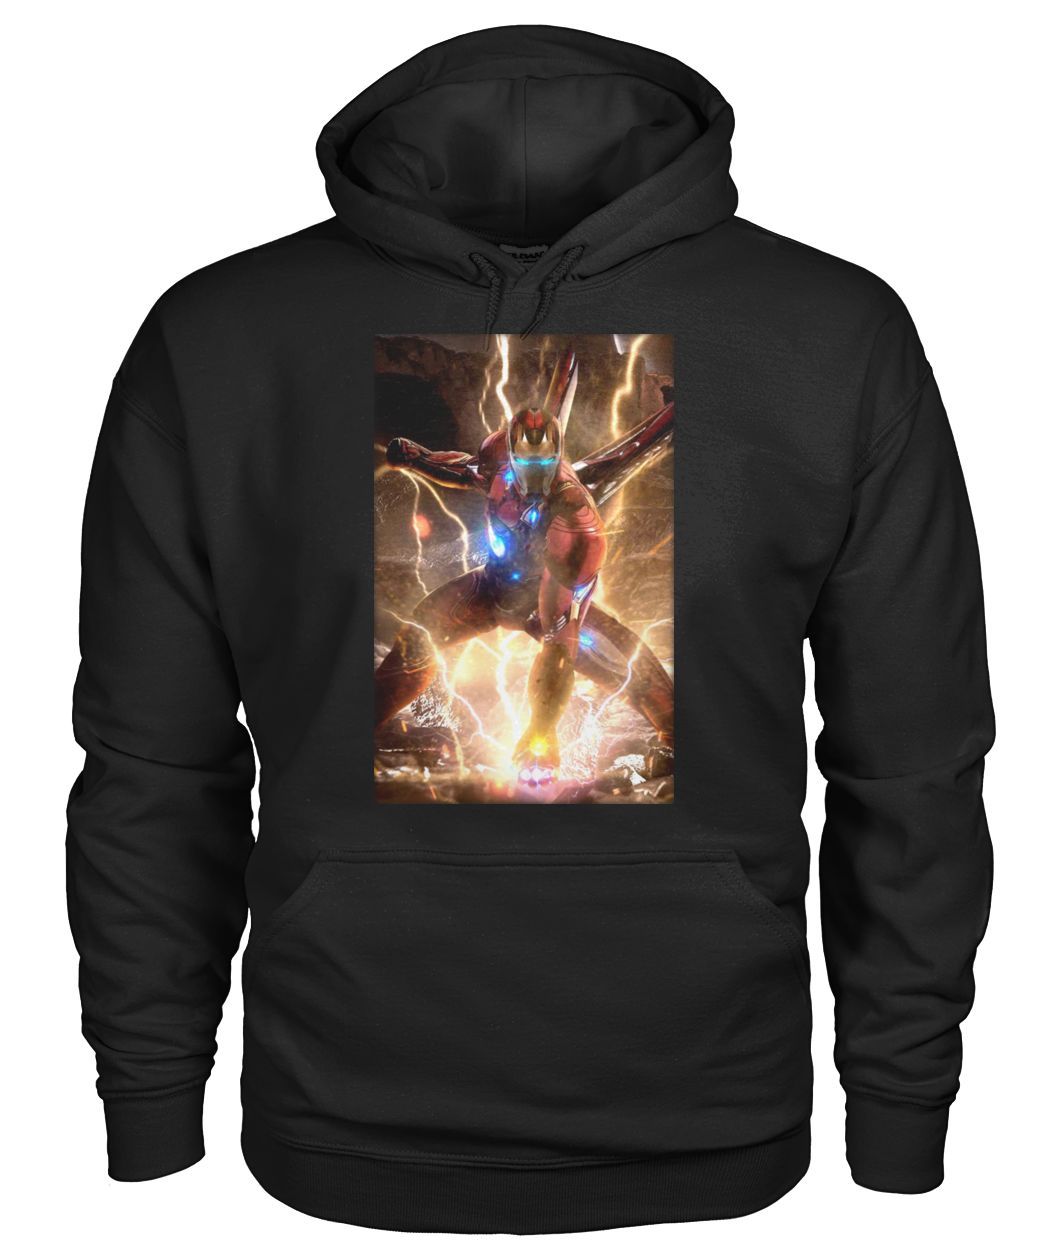 Marvel endgame Iron man with infinity gauntlet gildan hoodie